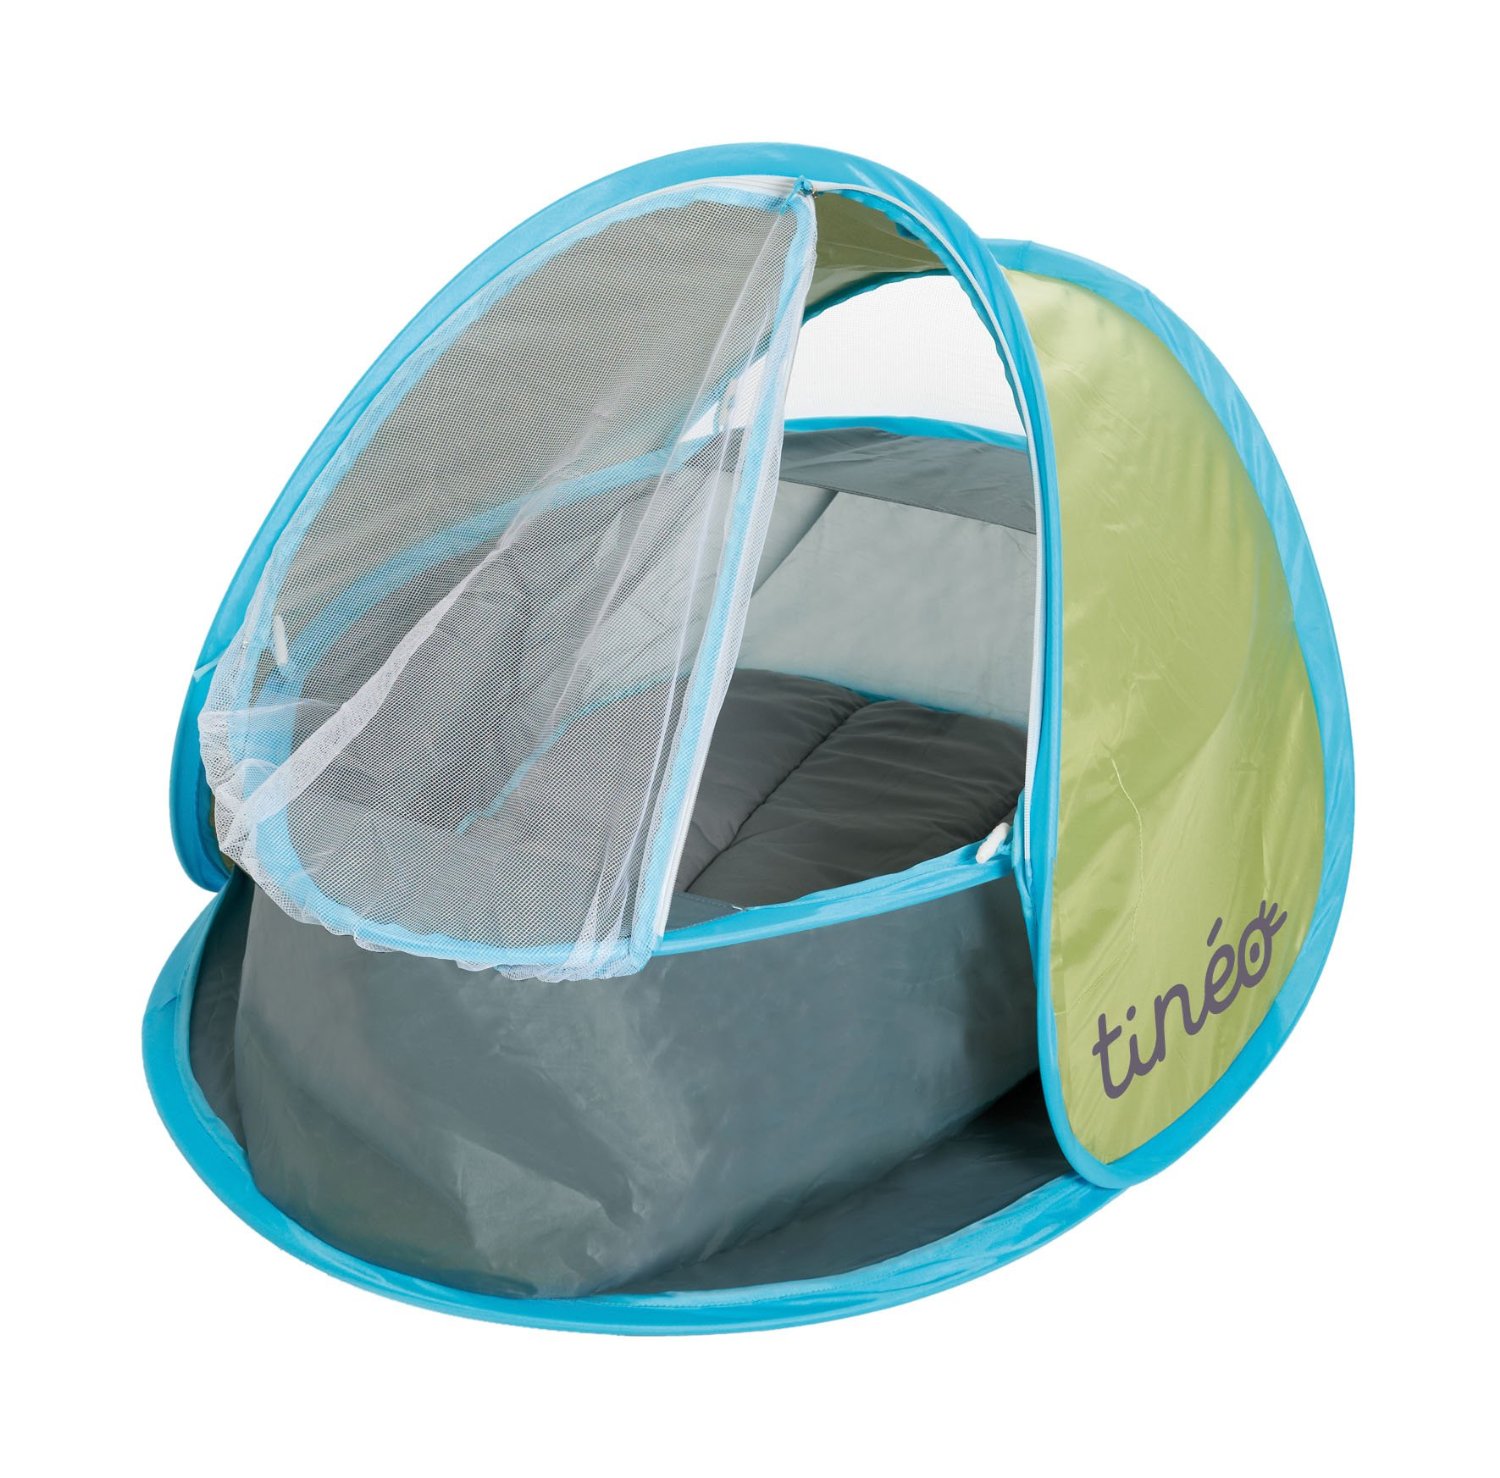 Tente pop up anti UV TINEO : Comparateur, Avis, Prix